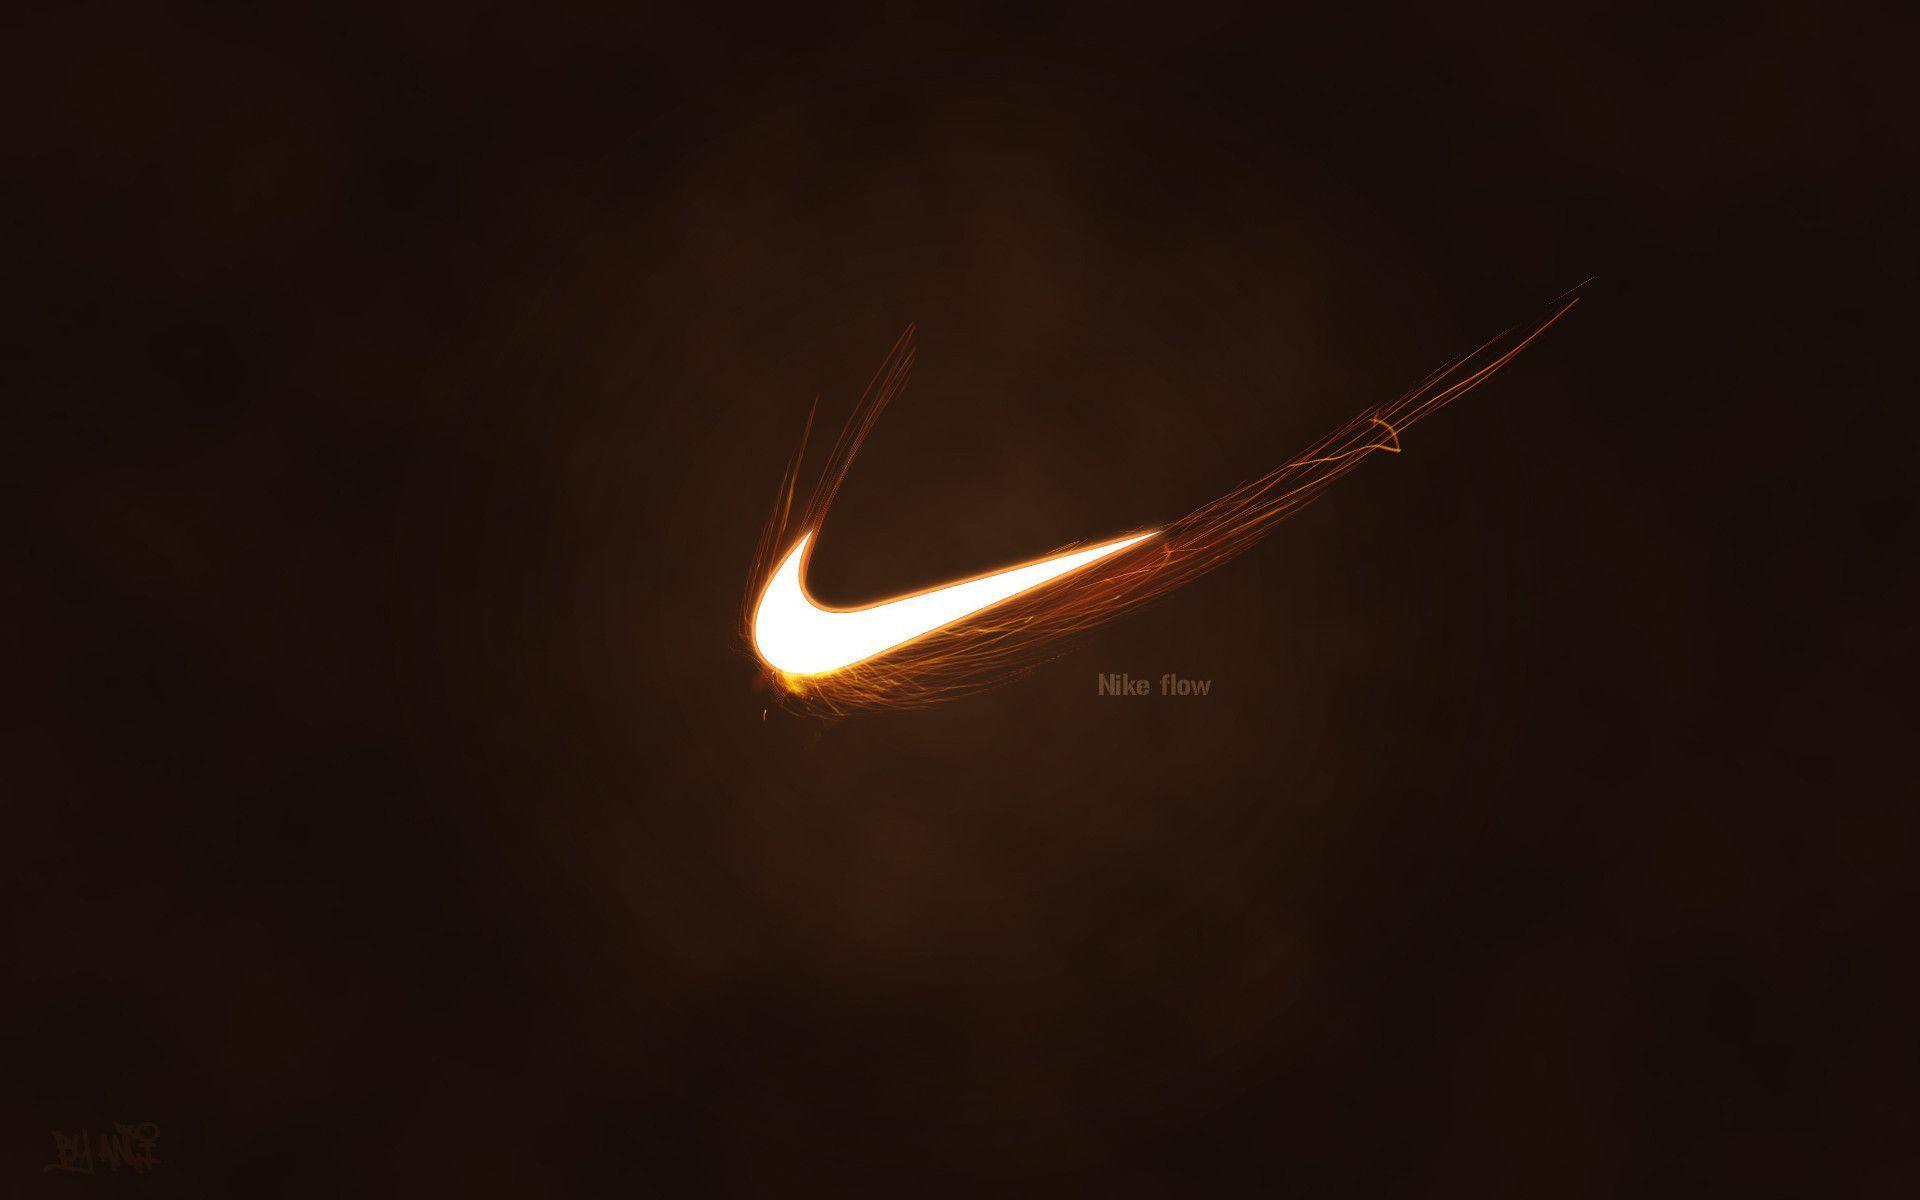 Cool Nike Logos 105 103202 Image HD Wallpaper. Wallfoy.com